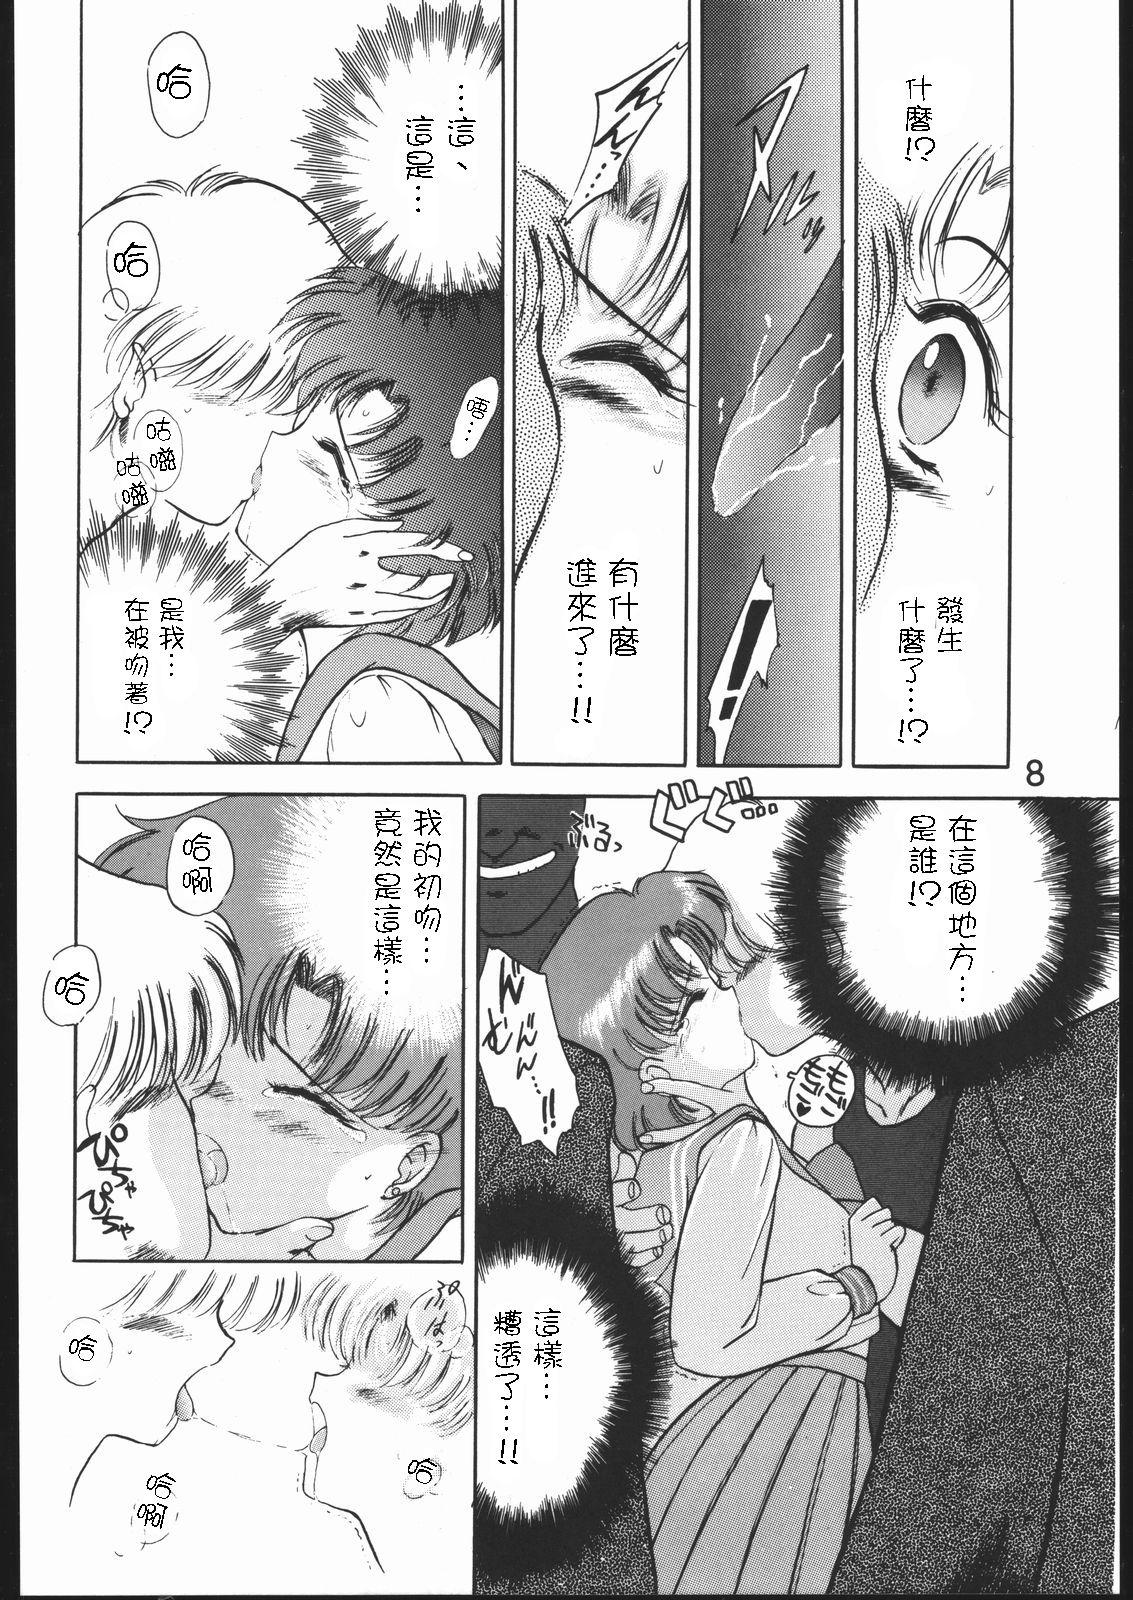 Facials SUBMISSION MERCURY PLUS - Sailor moon Pick Up - Page 8